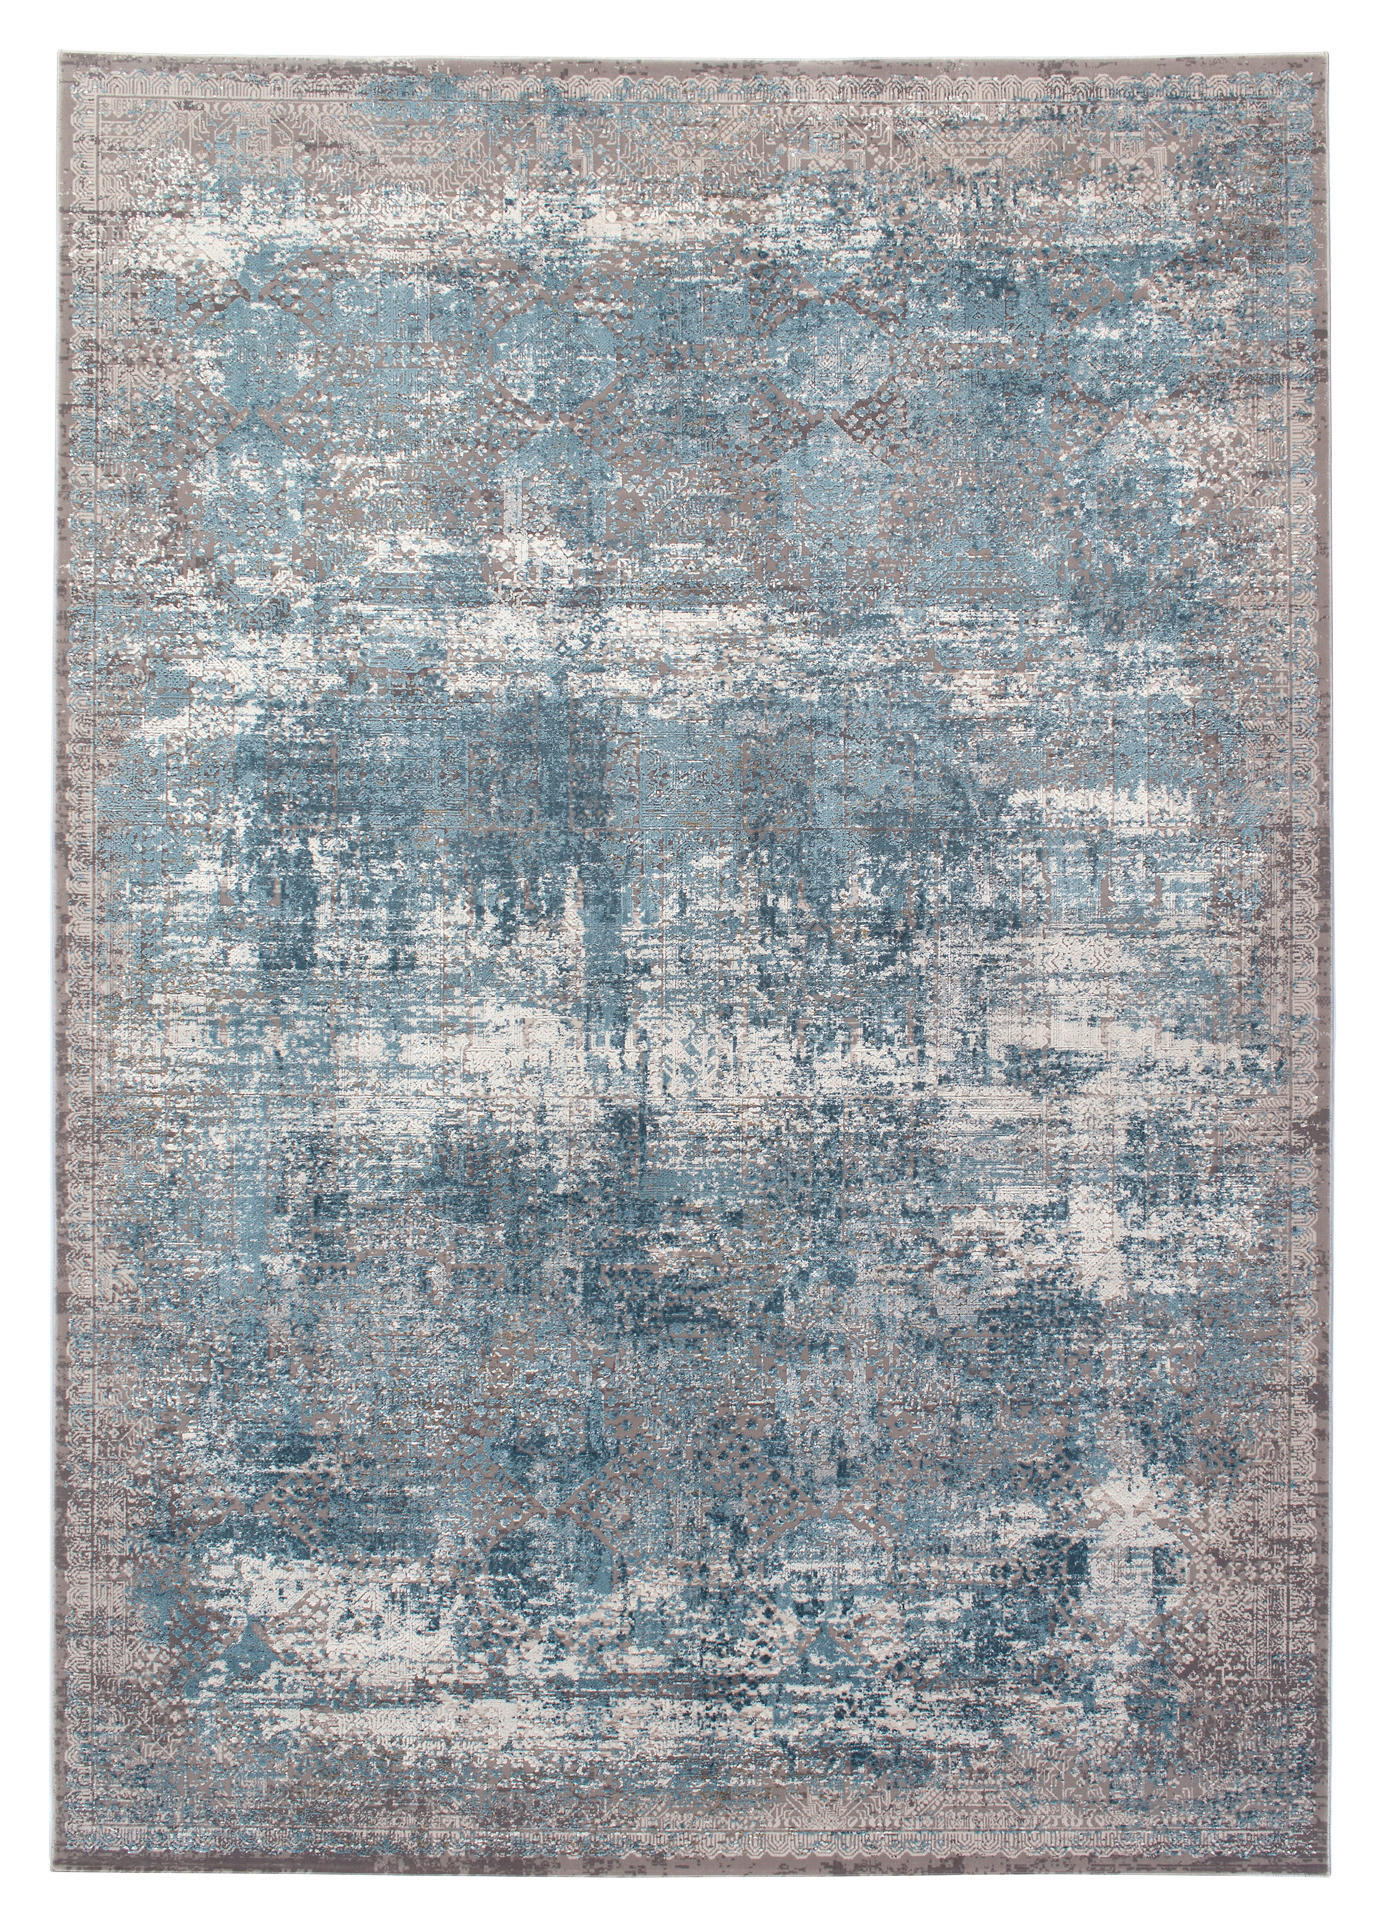 WEBTEPPICH  240/340 cm  Blau, Grau, Hellgrau, Hellblau, Dunkelblau, Dunkelgrau   - Blau/Dunkelgrau, Design, Textil (240/340cm) - Musterring